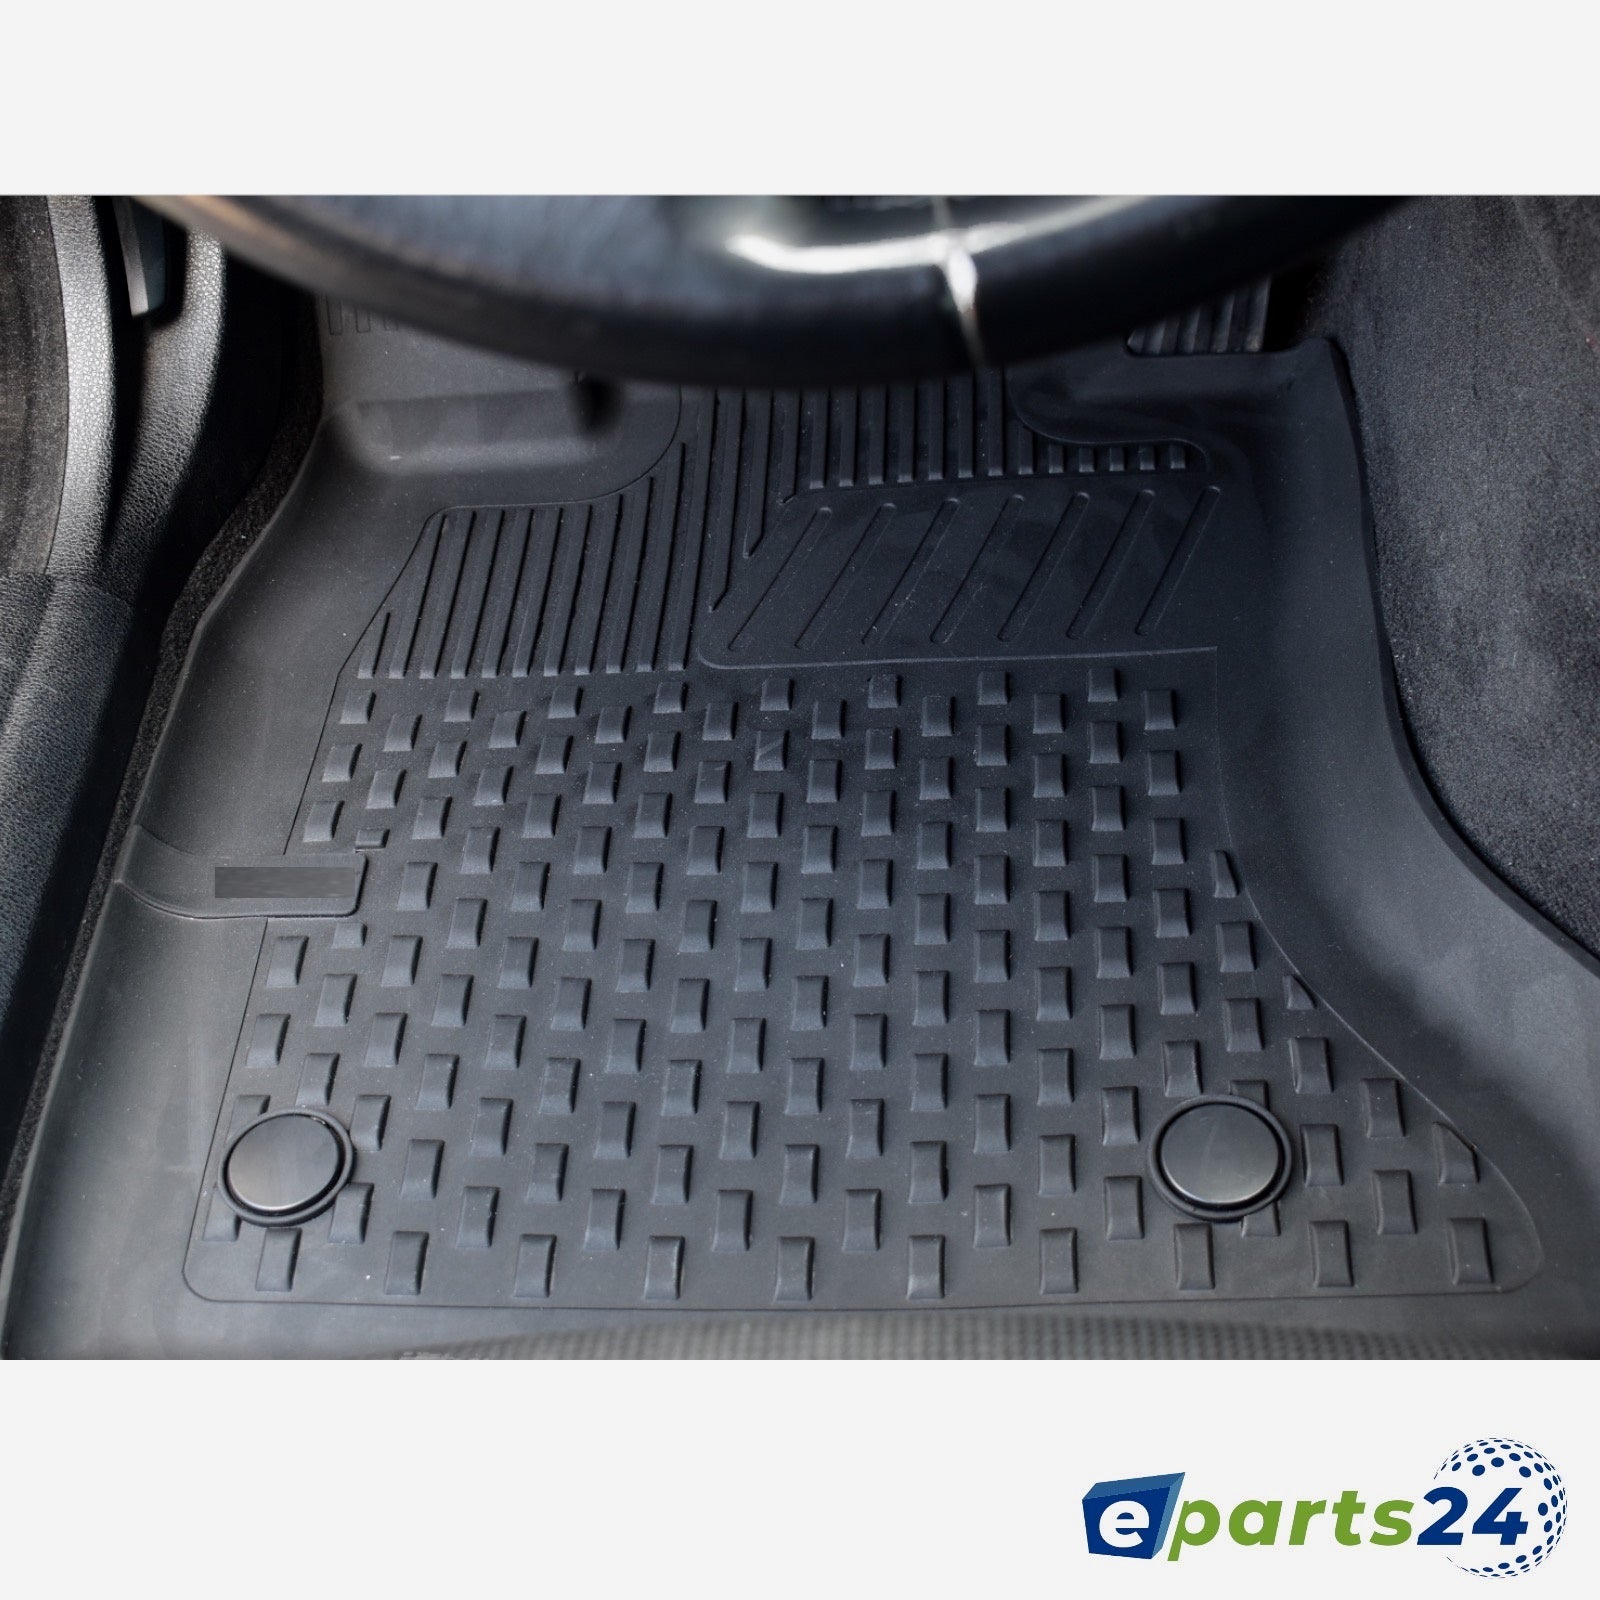 Fußmatten E-Parts24 5tlg. Duster – Dacia M II Automatten für TPE 2018-2023 Premium